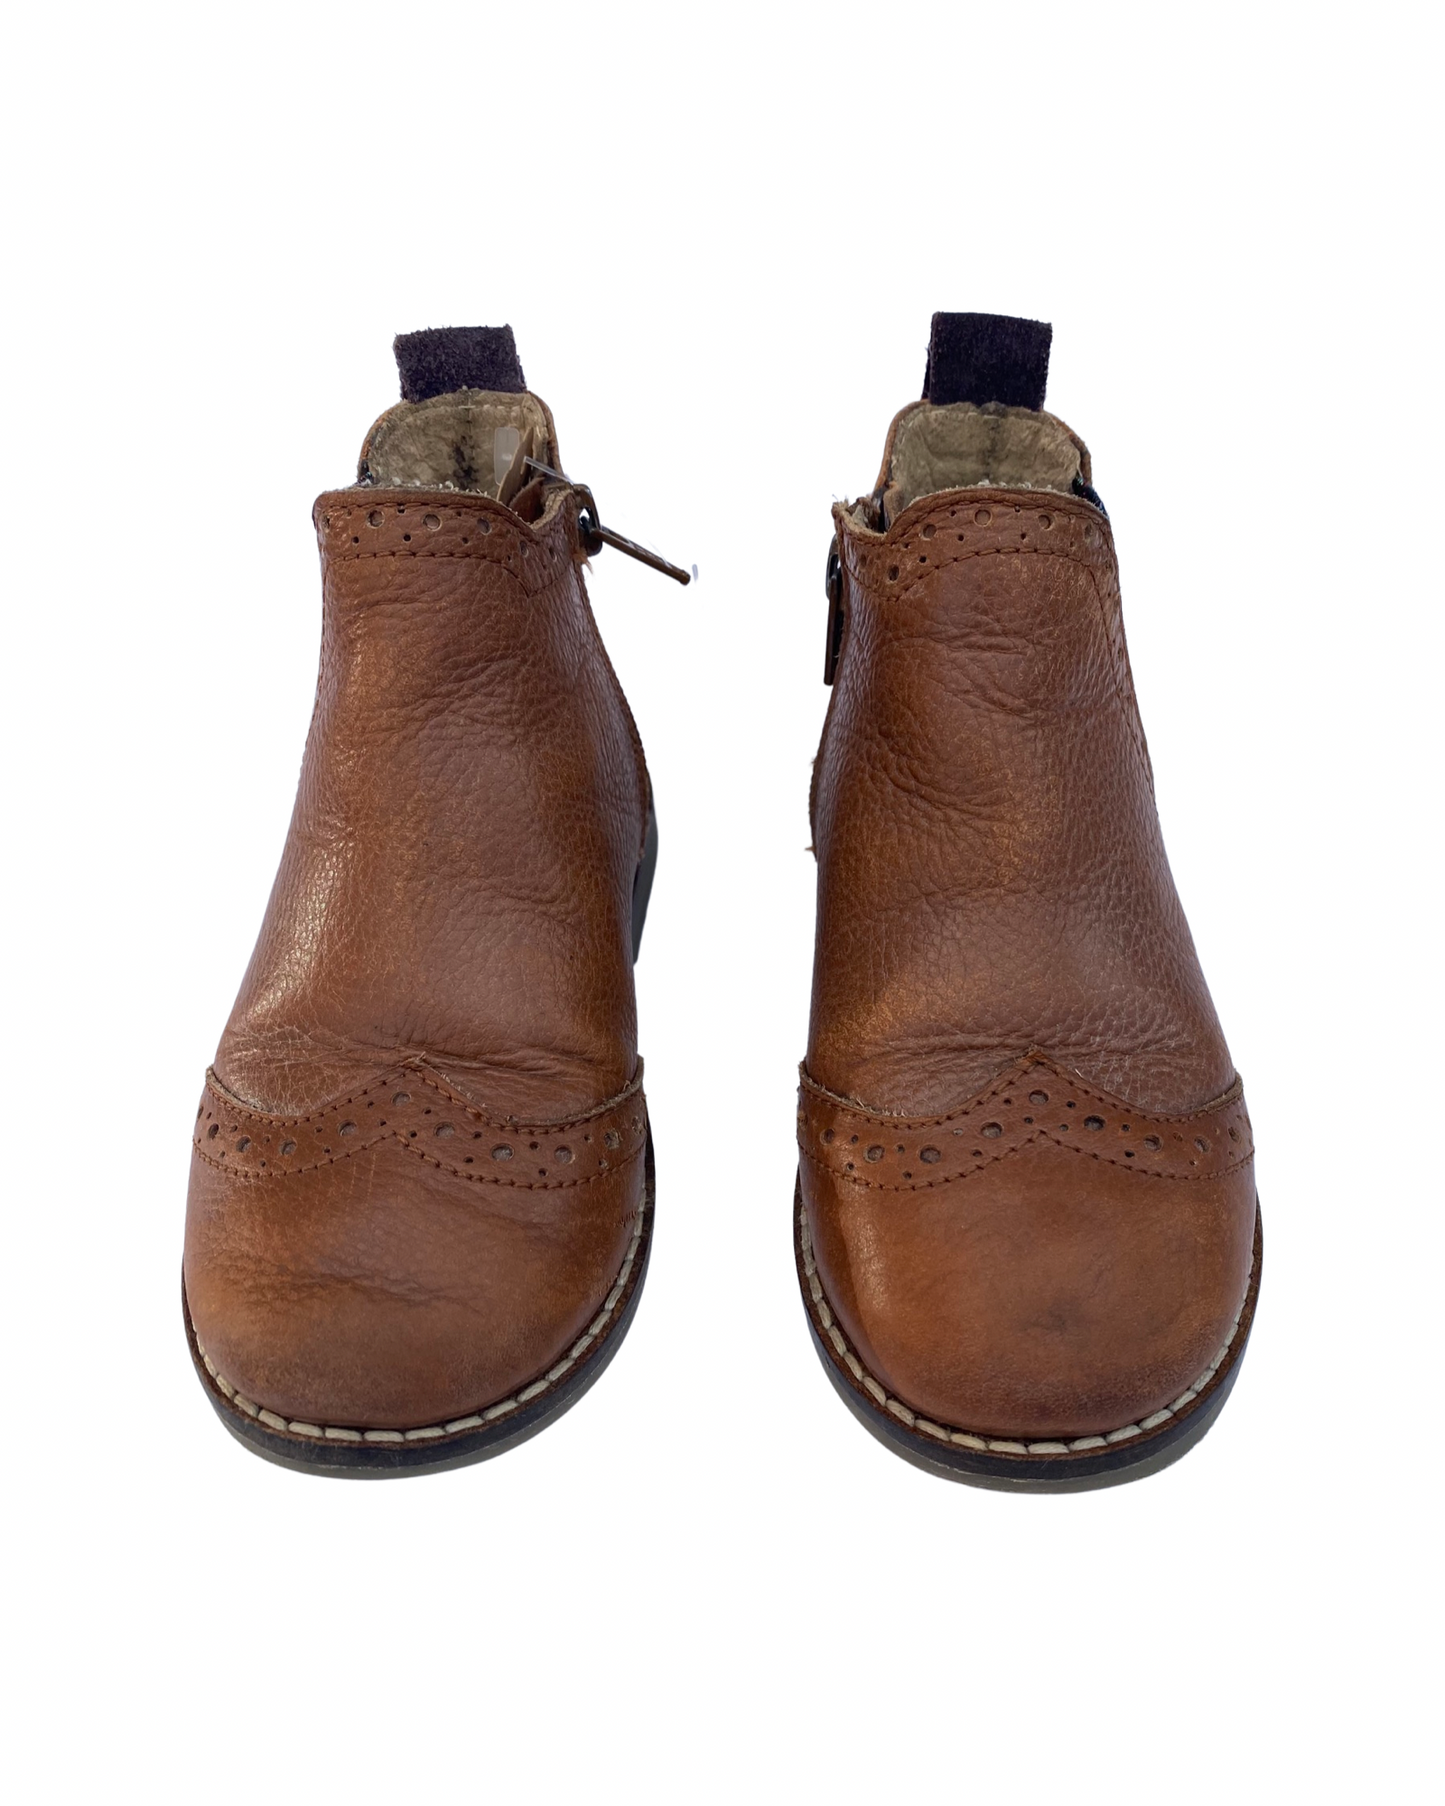 Mini Boden tan chelsea boots (size UK8/EU26)